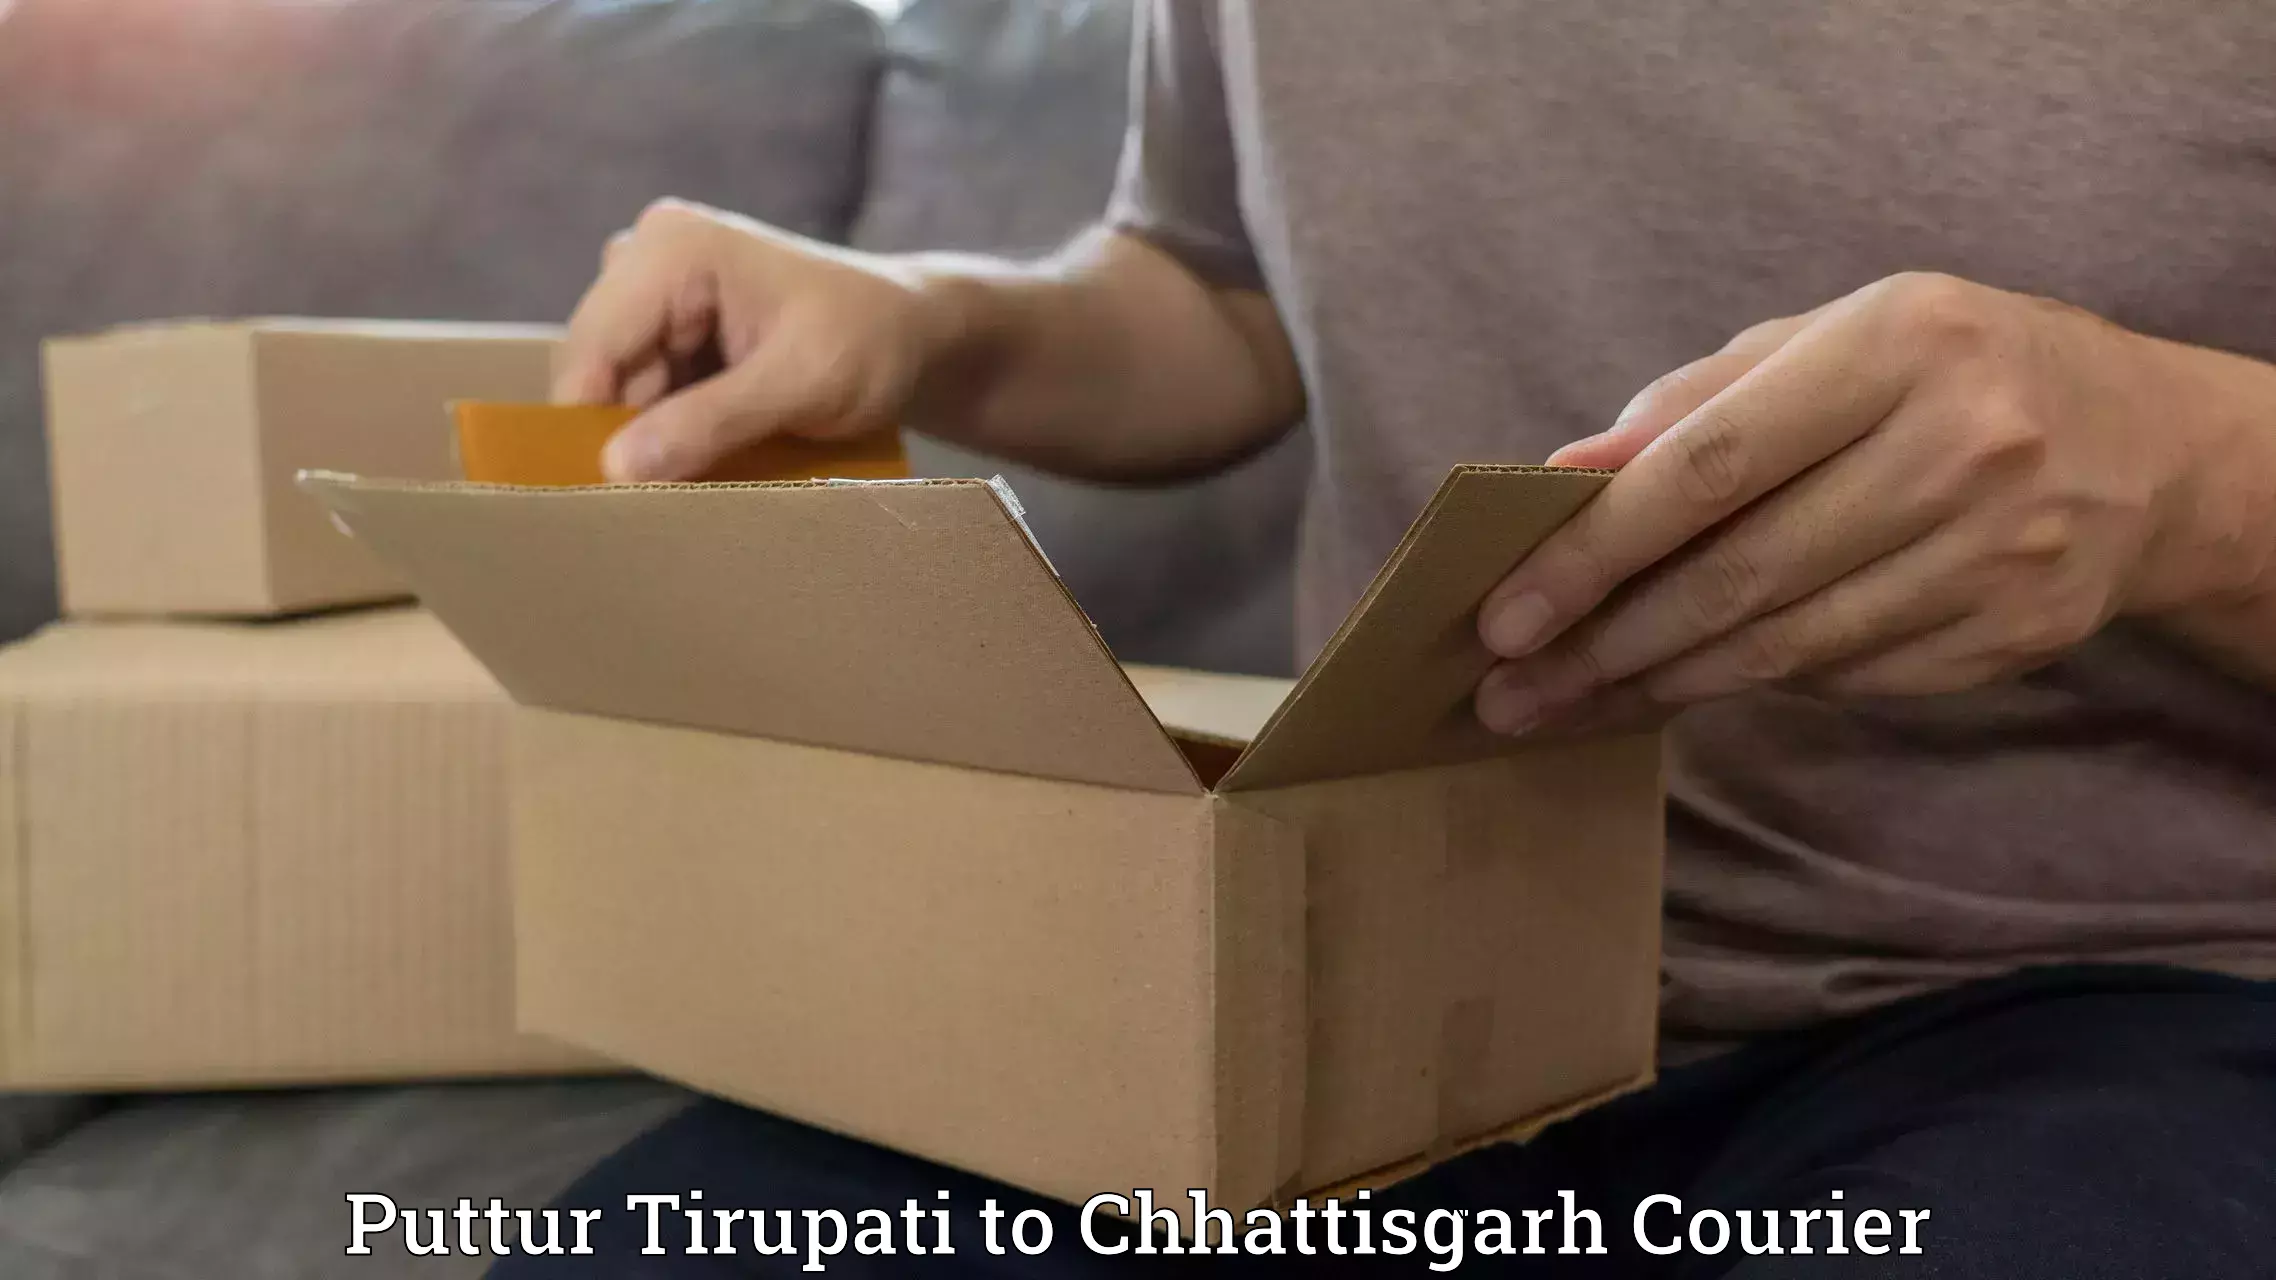 Efficient order fulfillment Puttur Tirupati to Tilda